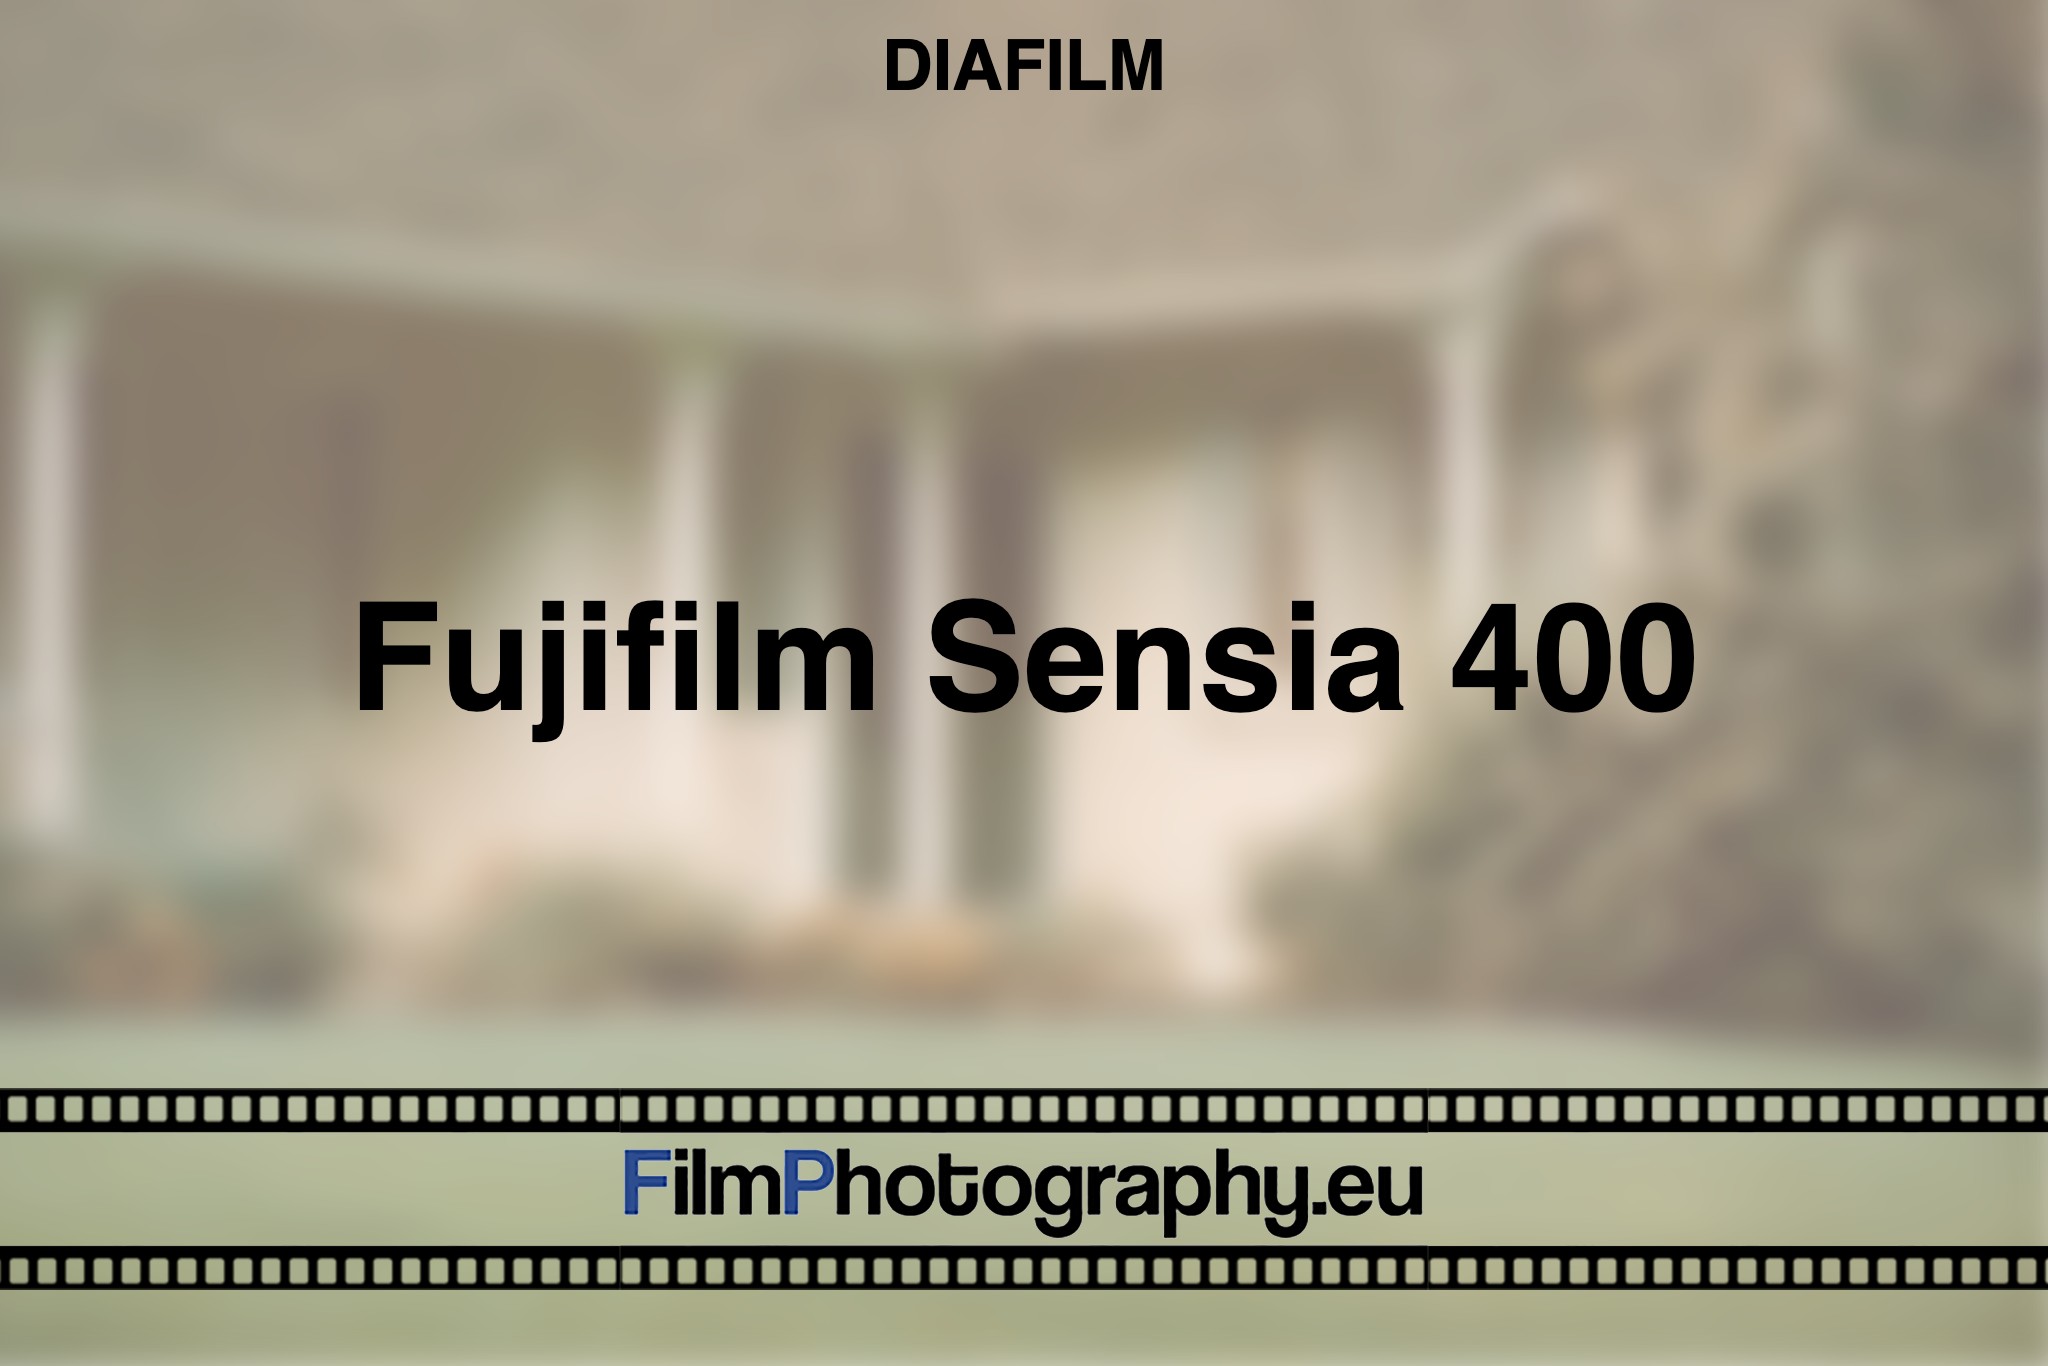 fujifilm-sensia-400-diafilm-bnv